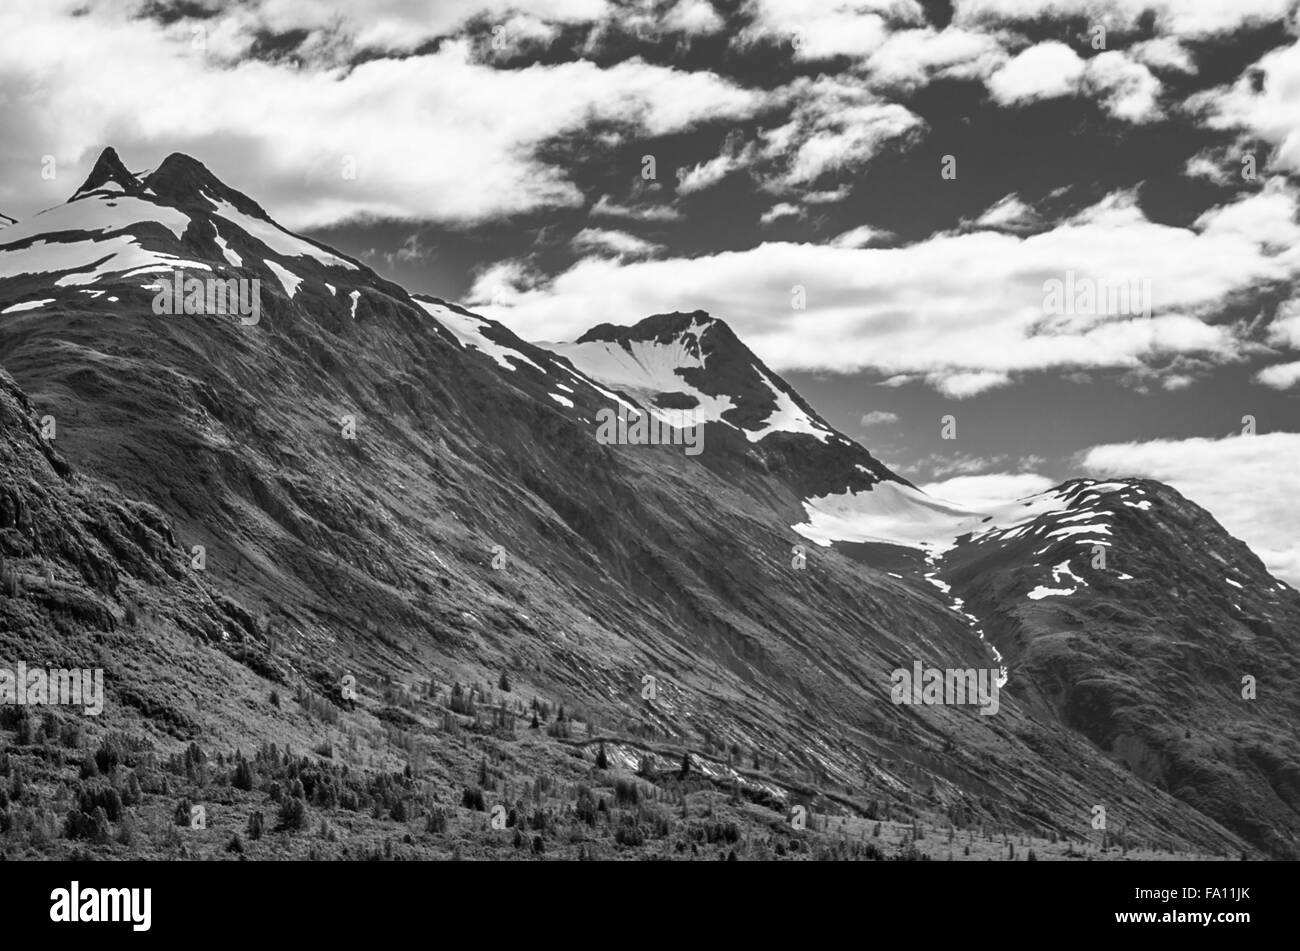 Dramatic Photo Of Mountain Peaks And Sky In Black & White In Glacier Bay National Park, Alaska Stock Photo